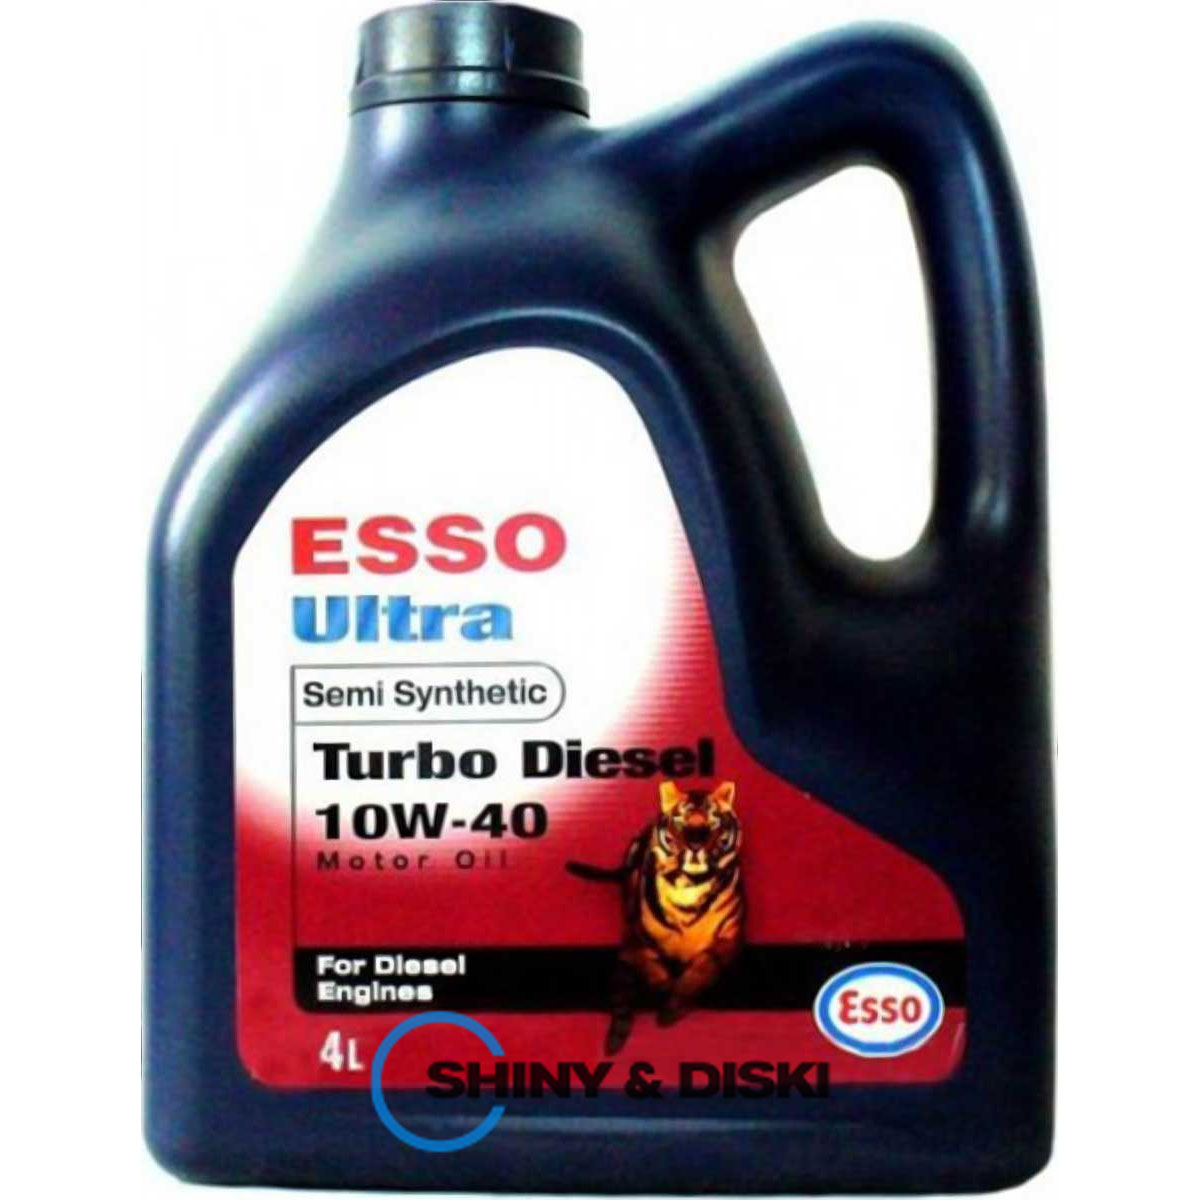 esso ultra turbo diesel 10w-40 (4л)